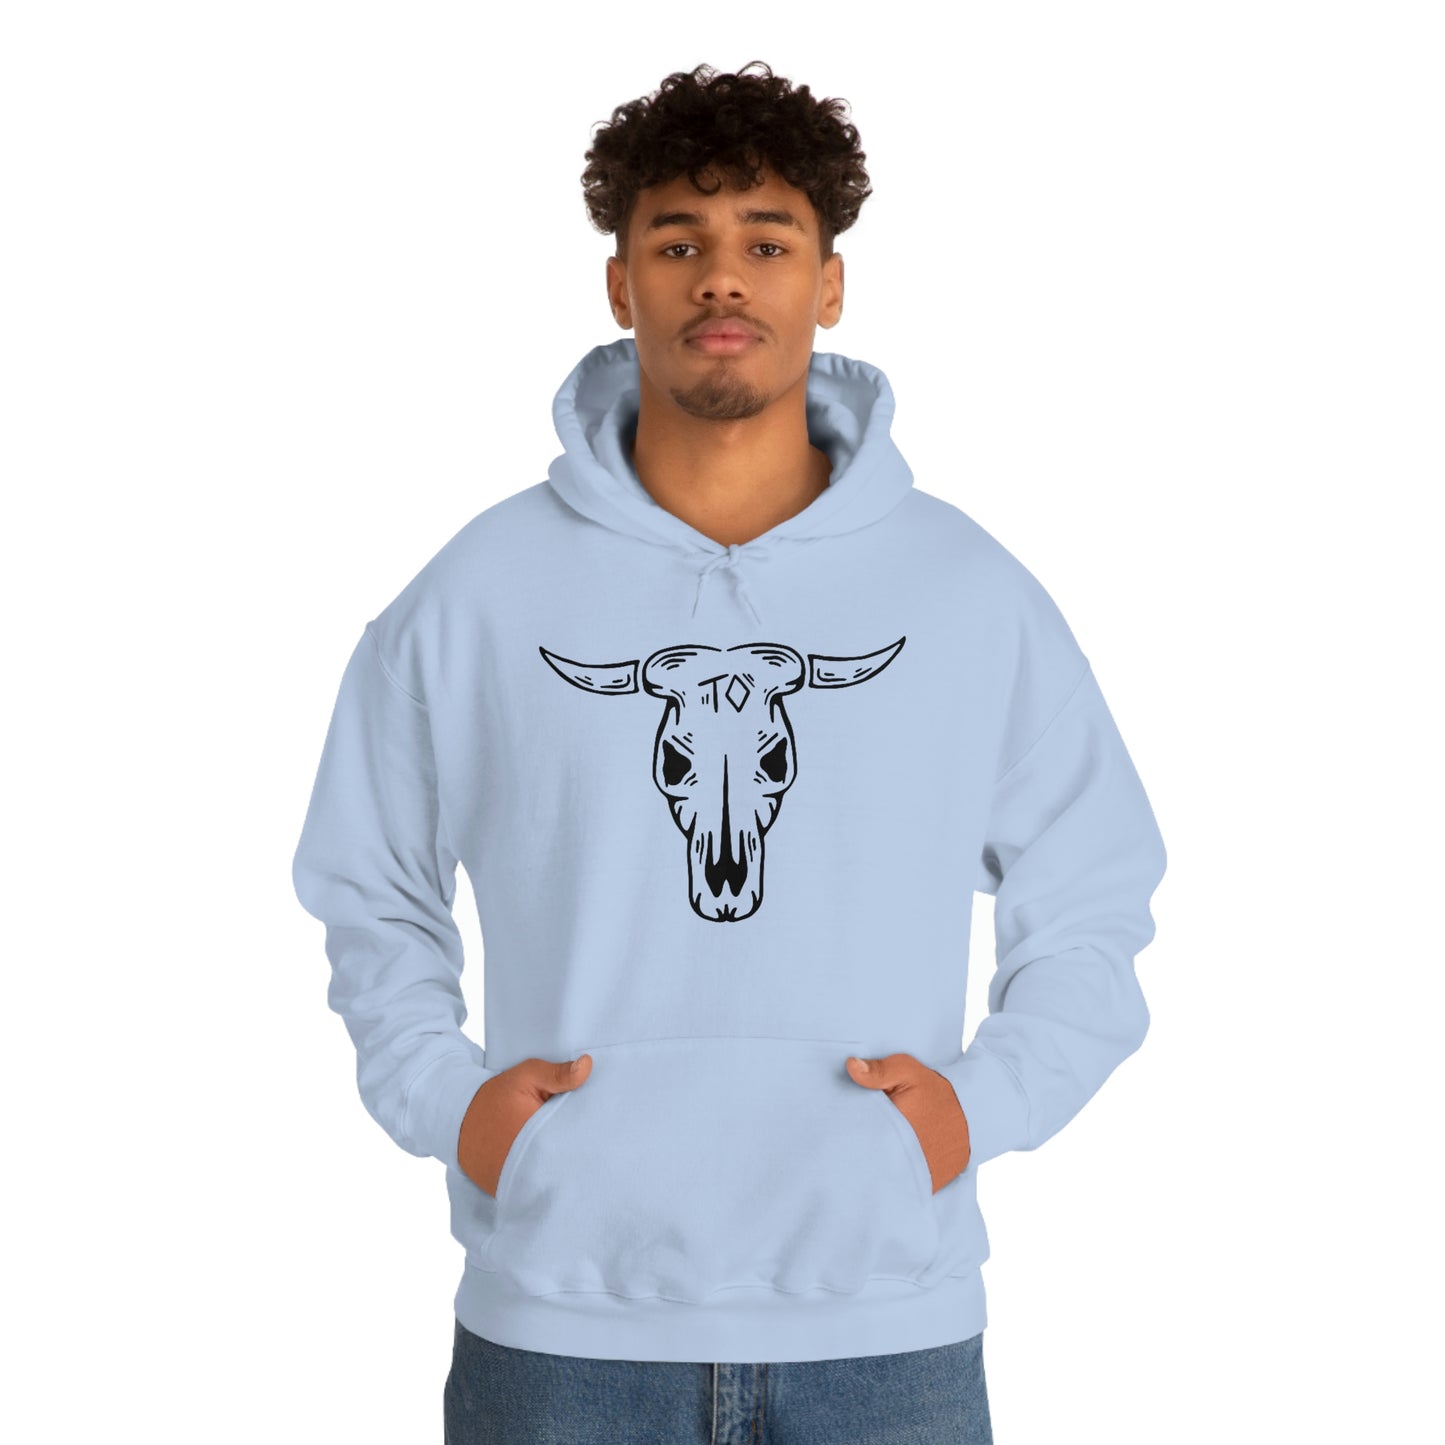 Unisex Texas Orgnls “Bull Logo” Hooded Sweatshirt